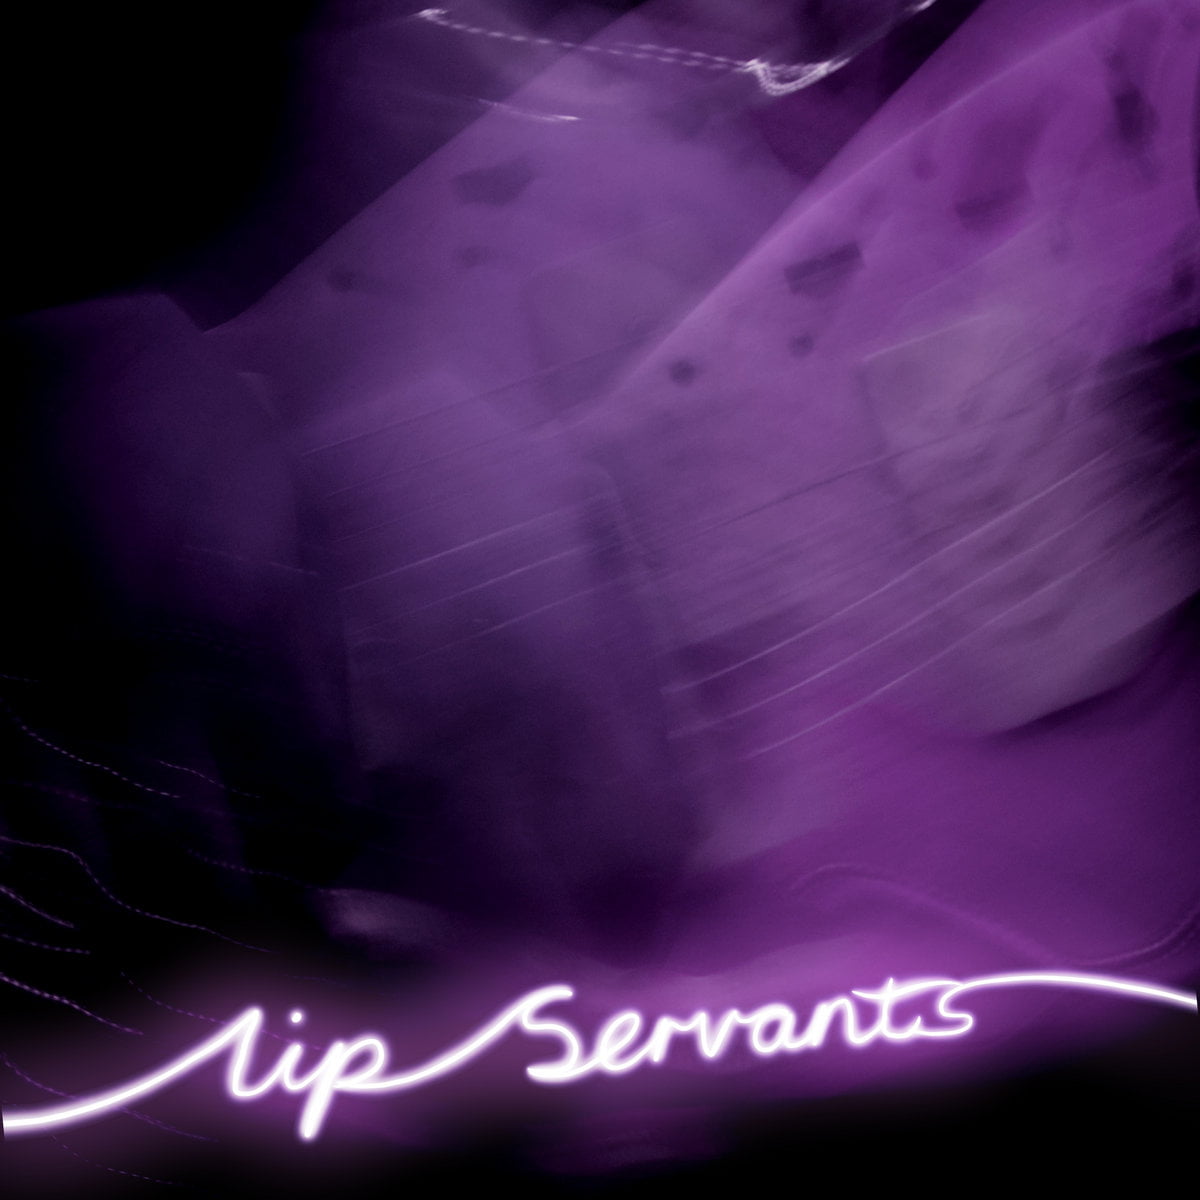 Lip Servants Release Debut Single Affectation / Stutter